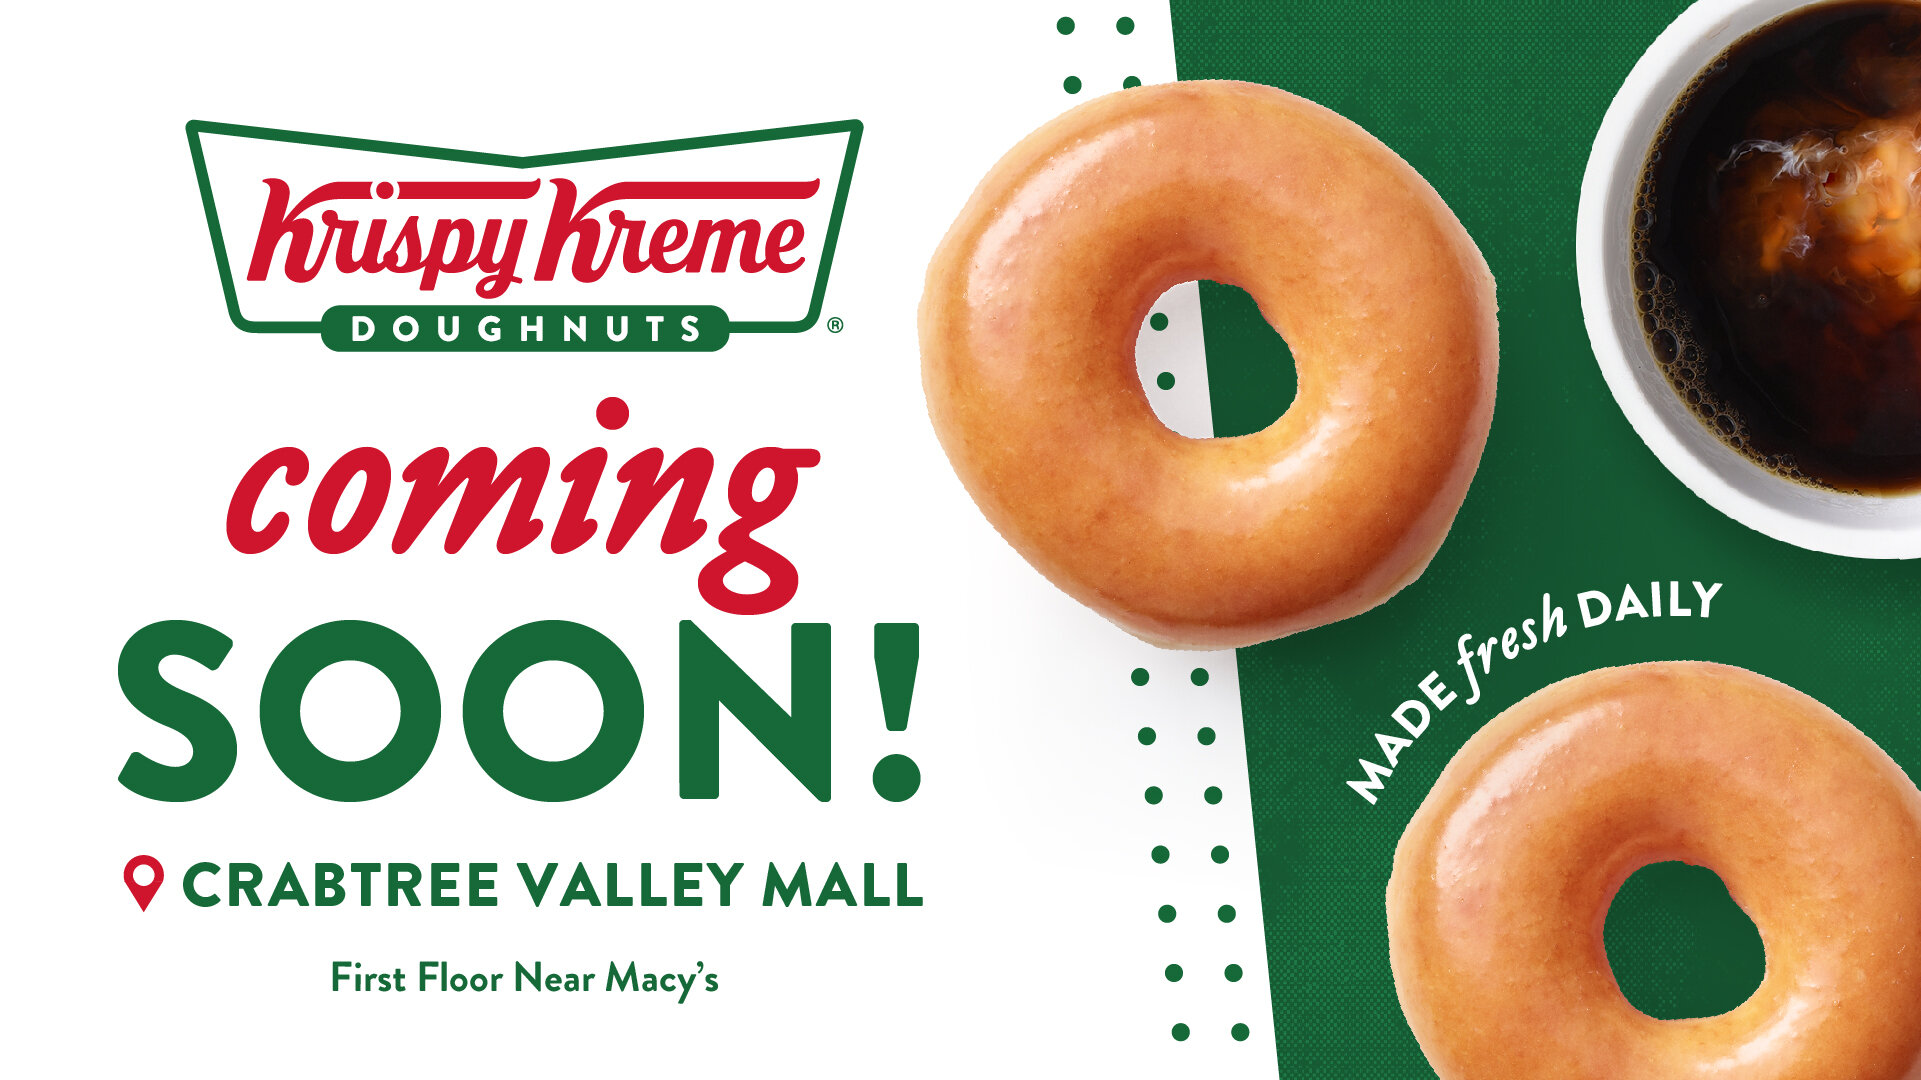 Krispy Kreme Doughnuts To Open New Doughnut Box Shaped Kiosk At Crabtree Valley Mall Tabletop Media Group